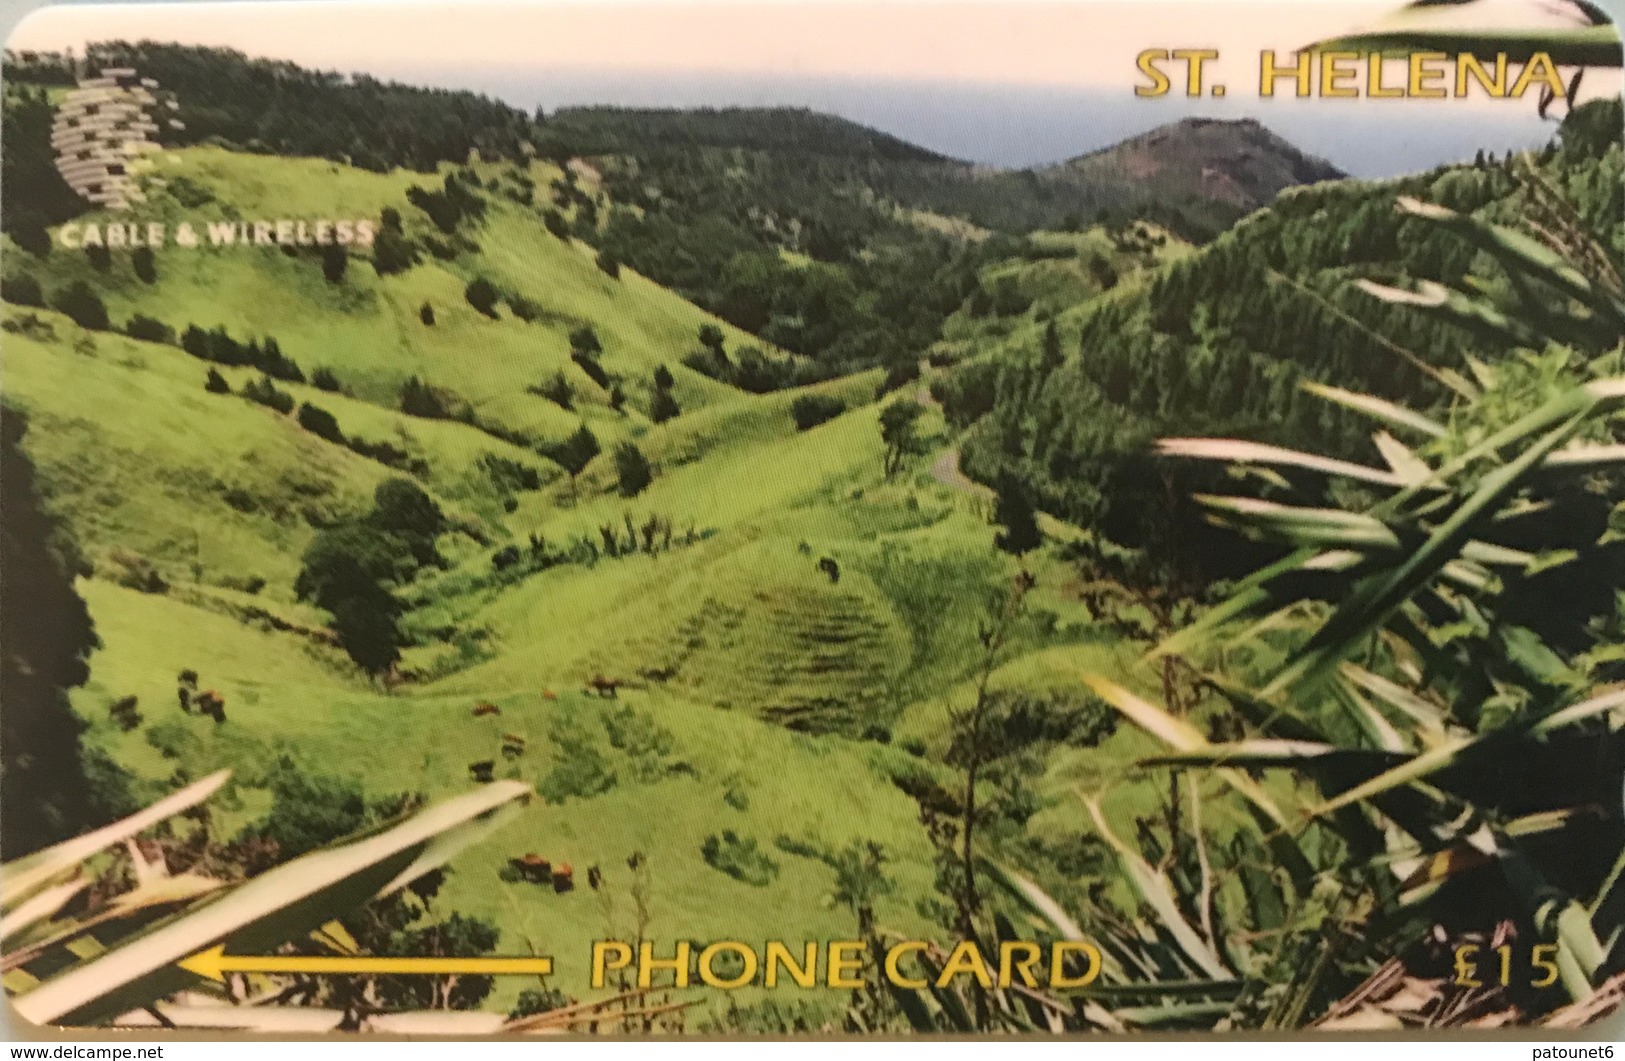 SAINTE-HELENE  -  Cable  § Wireless  -  " Former Governor "  -  £15,00 - Isola Sant'Elena